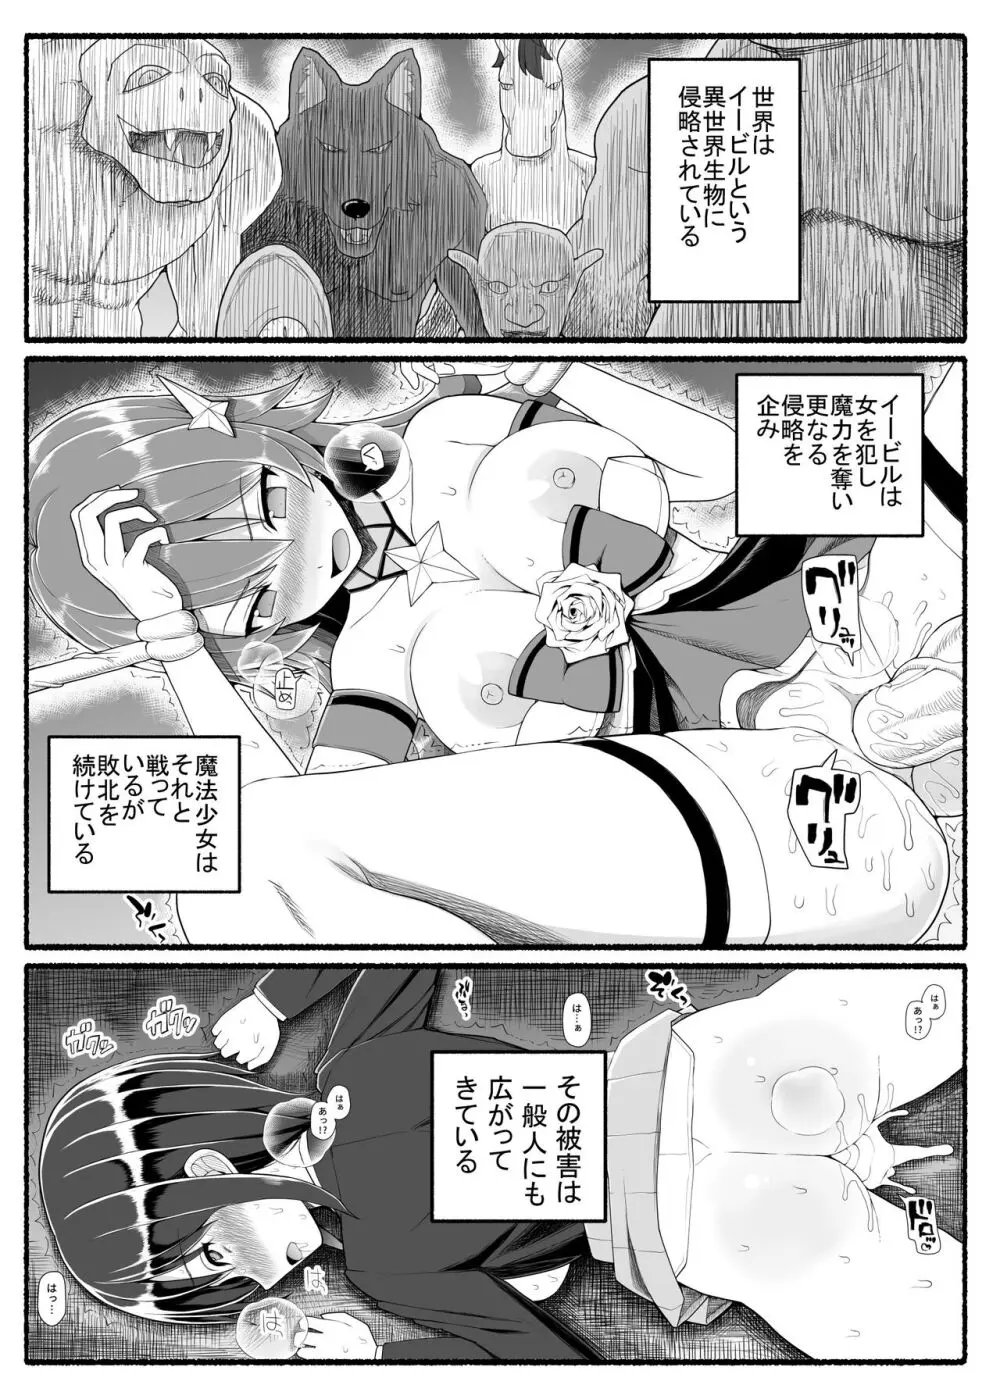 魔法少女vs淫魔生物22 2ページ